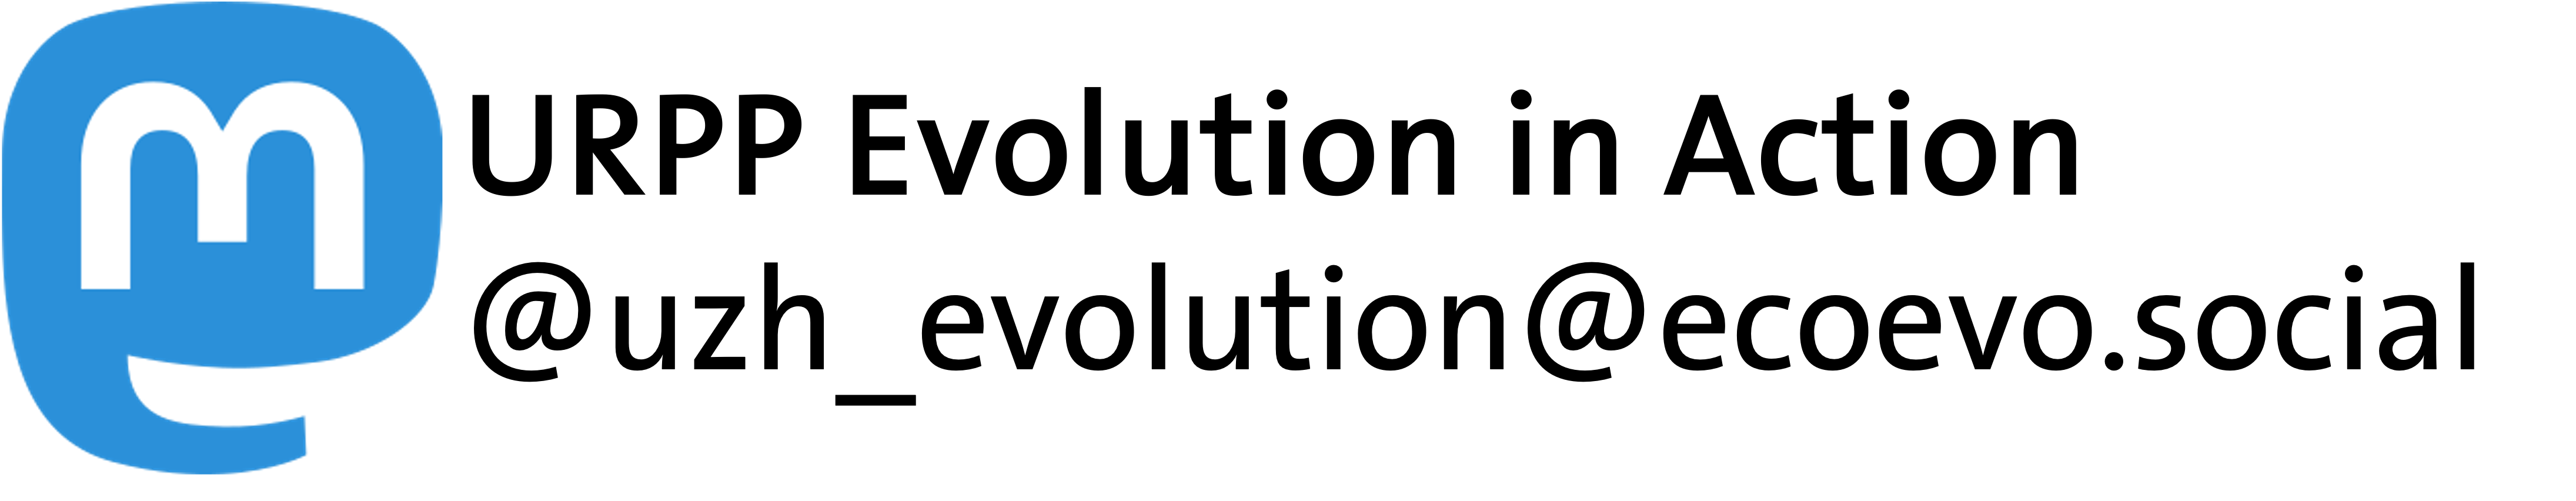 Mastodon Logo und Name @uzh_evolution